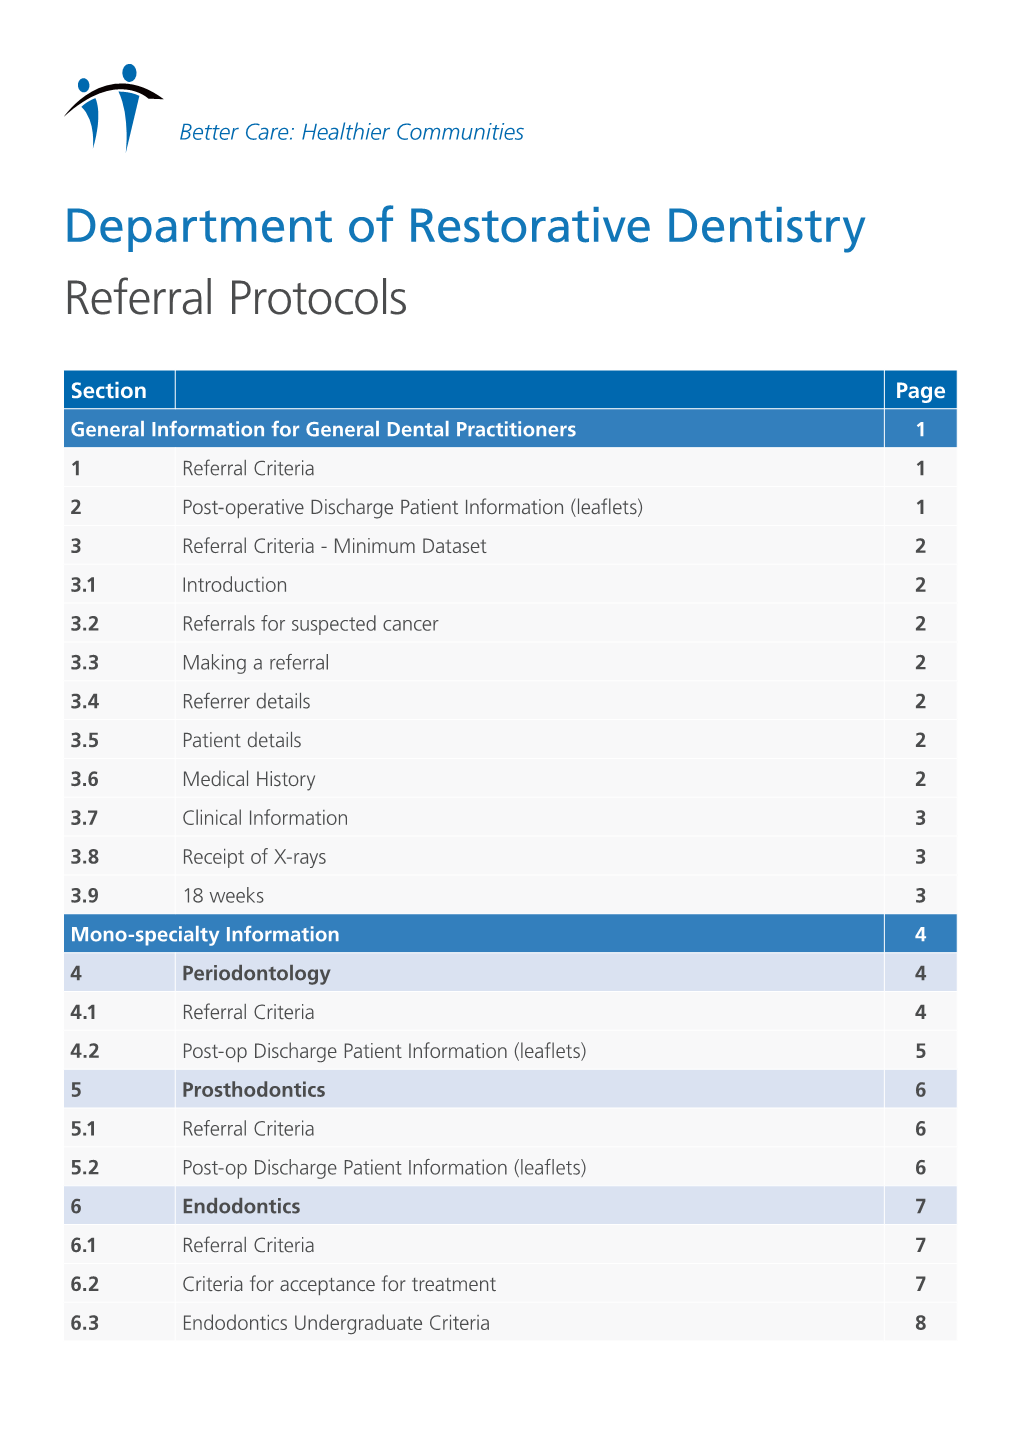 Department of Restorative Dentistry Referral Protocols